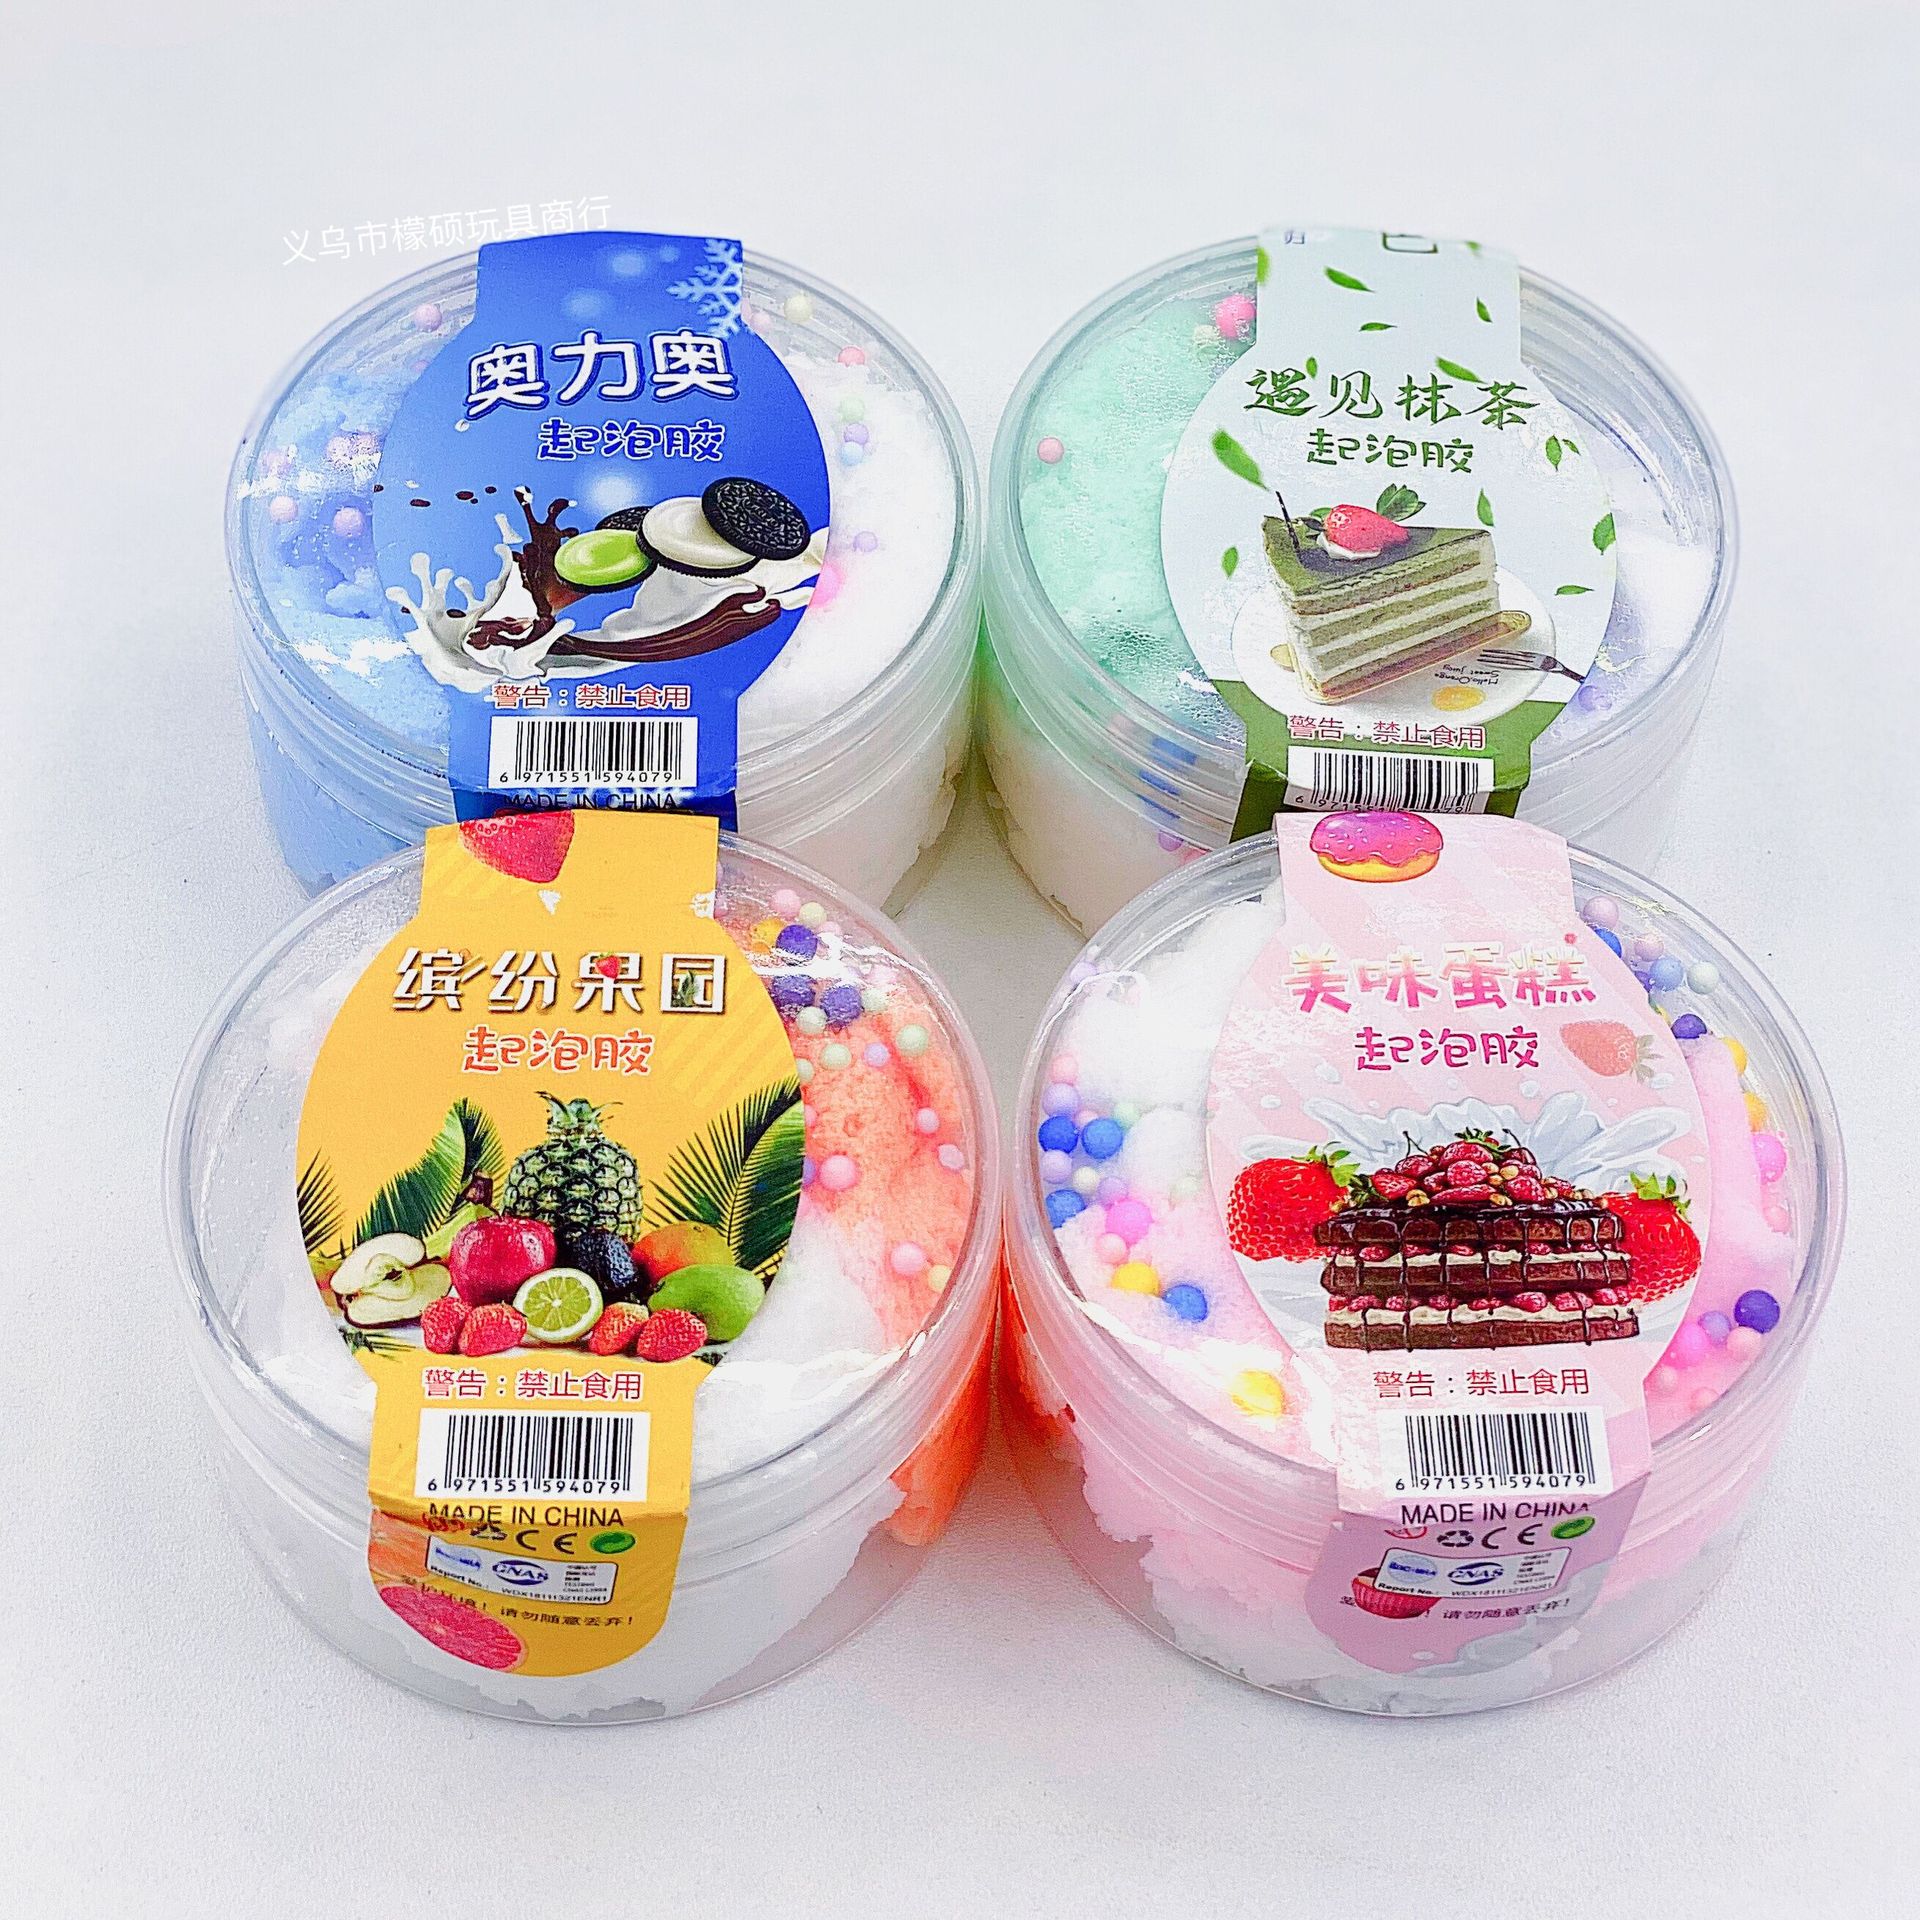 Colorful Fruit Thousand Silk Mud Packaging Looks Good Crystal Mud Slim Internet Hot Girlish Foaming Glue Drawing Good